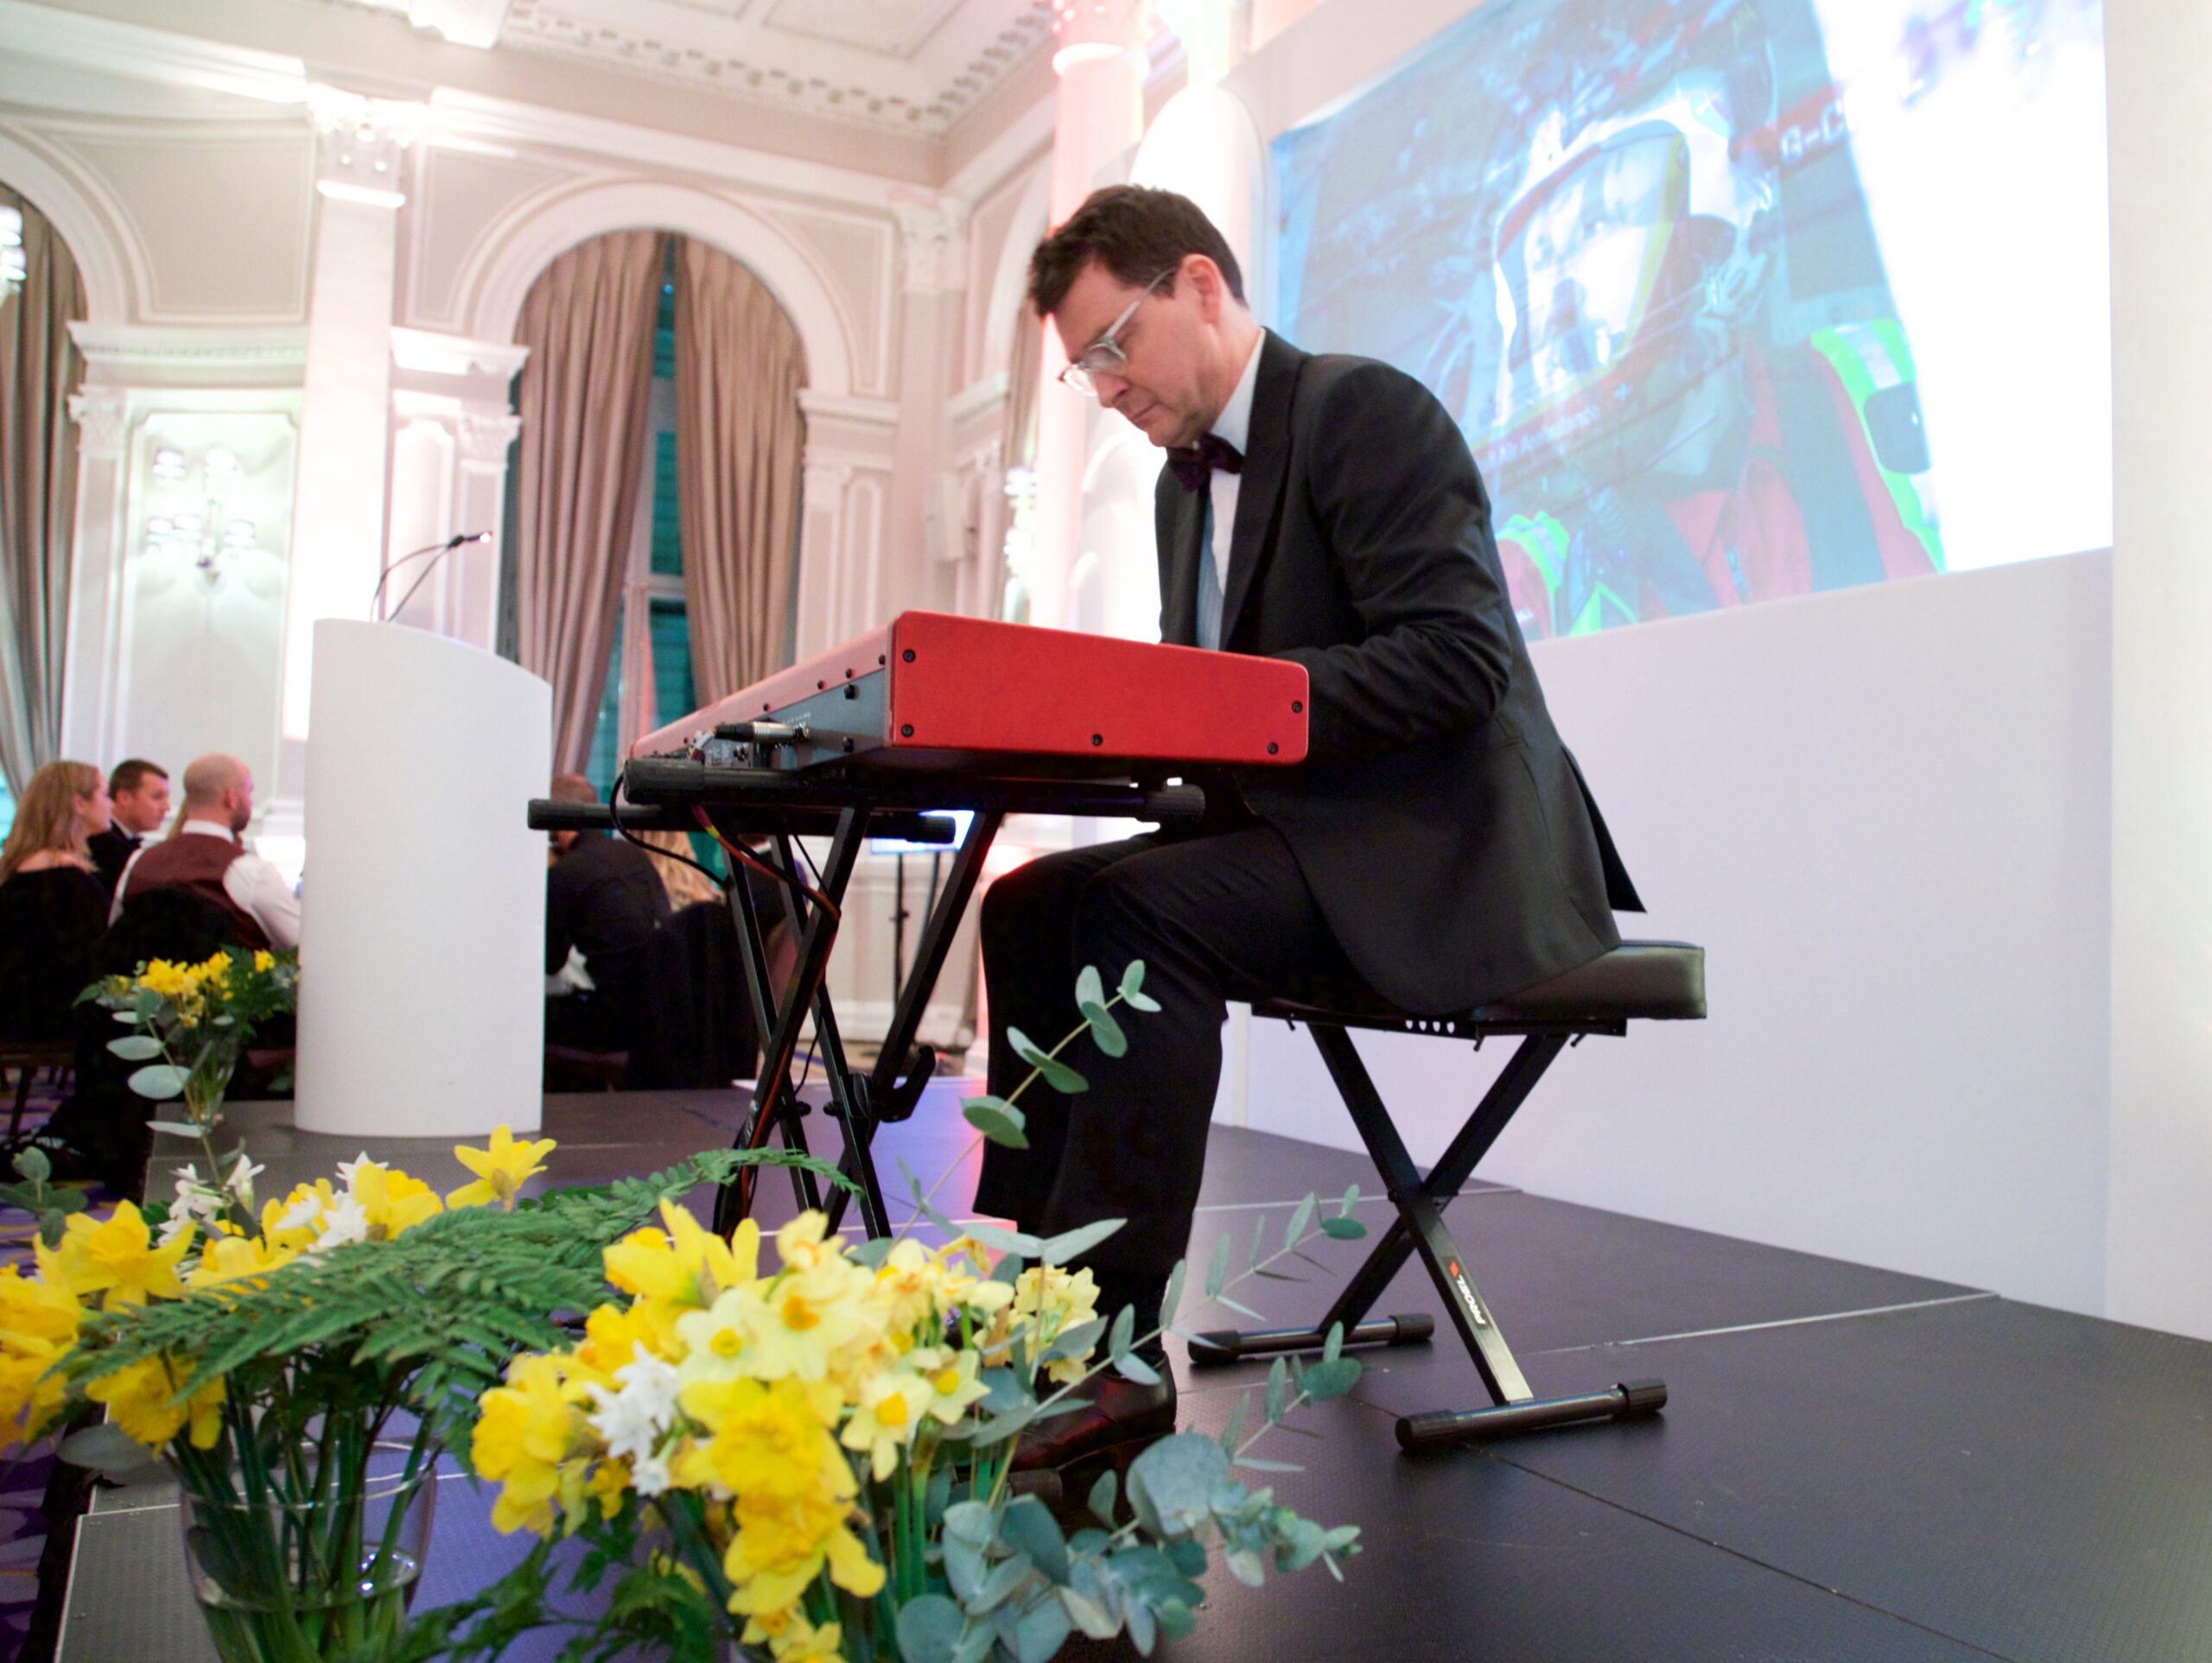 Award winning composer Ben Bartlett performed scaled